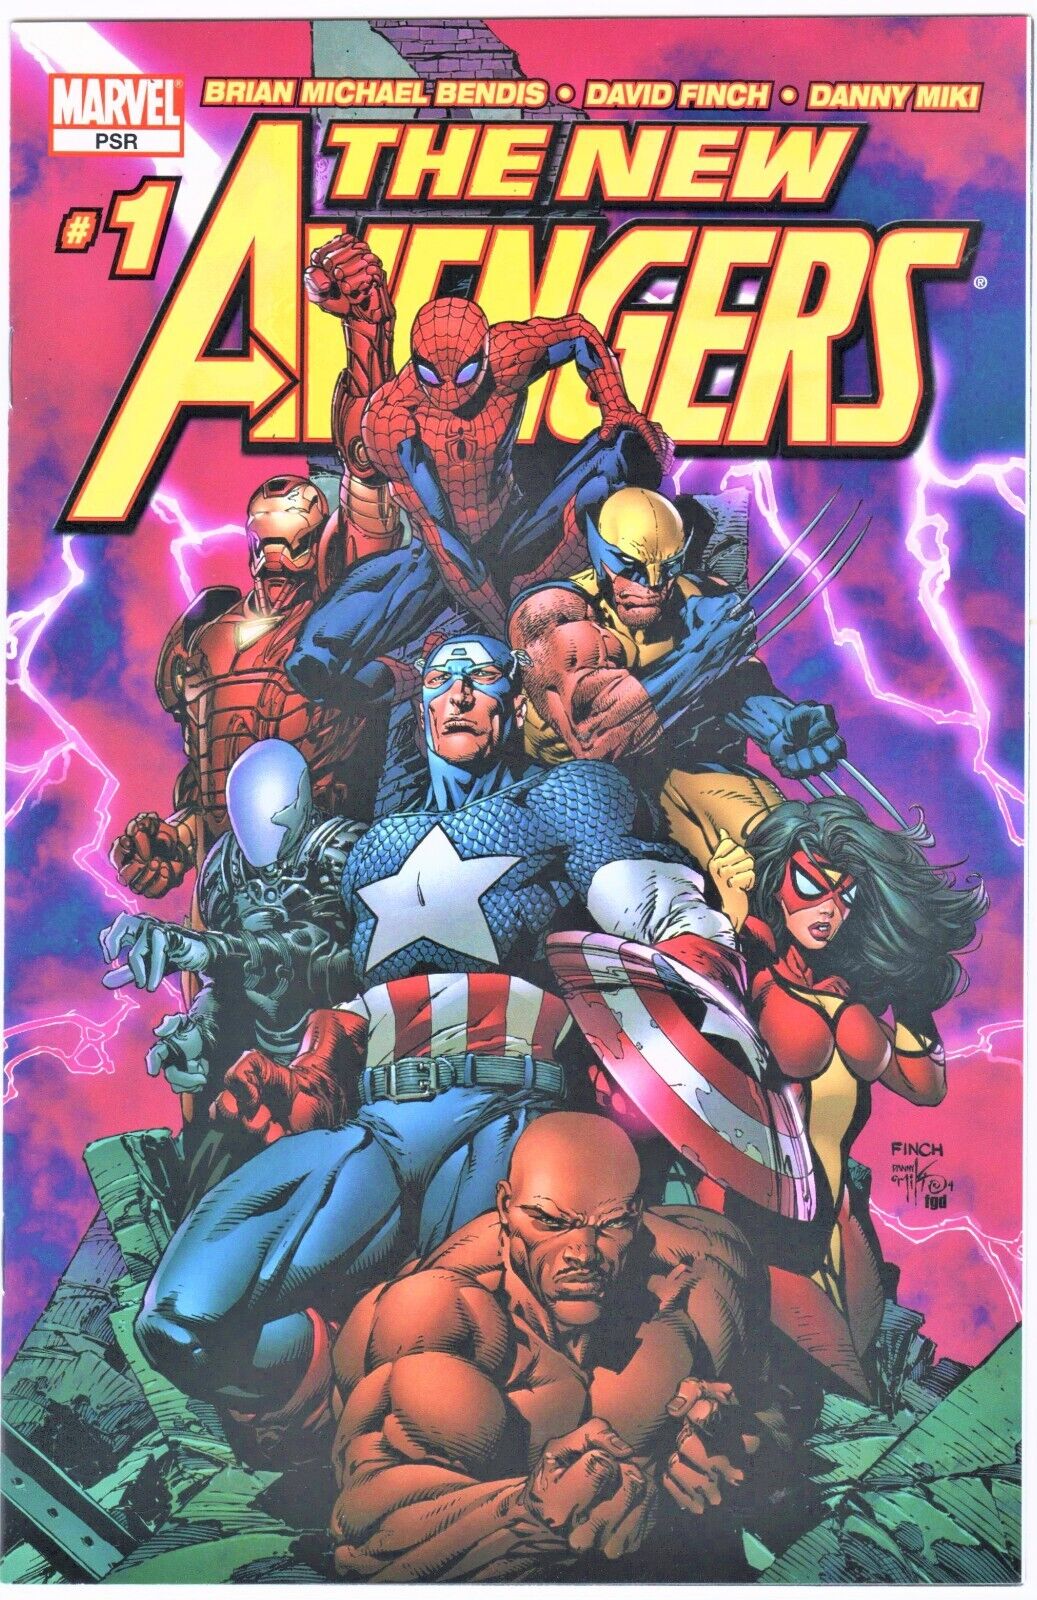 NEW Avengers #1 E VARIANT (2005) Cap ASSEMBLES NEW TEAM High-Def Scan Modern Age